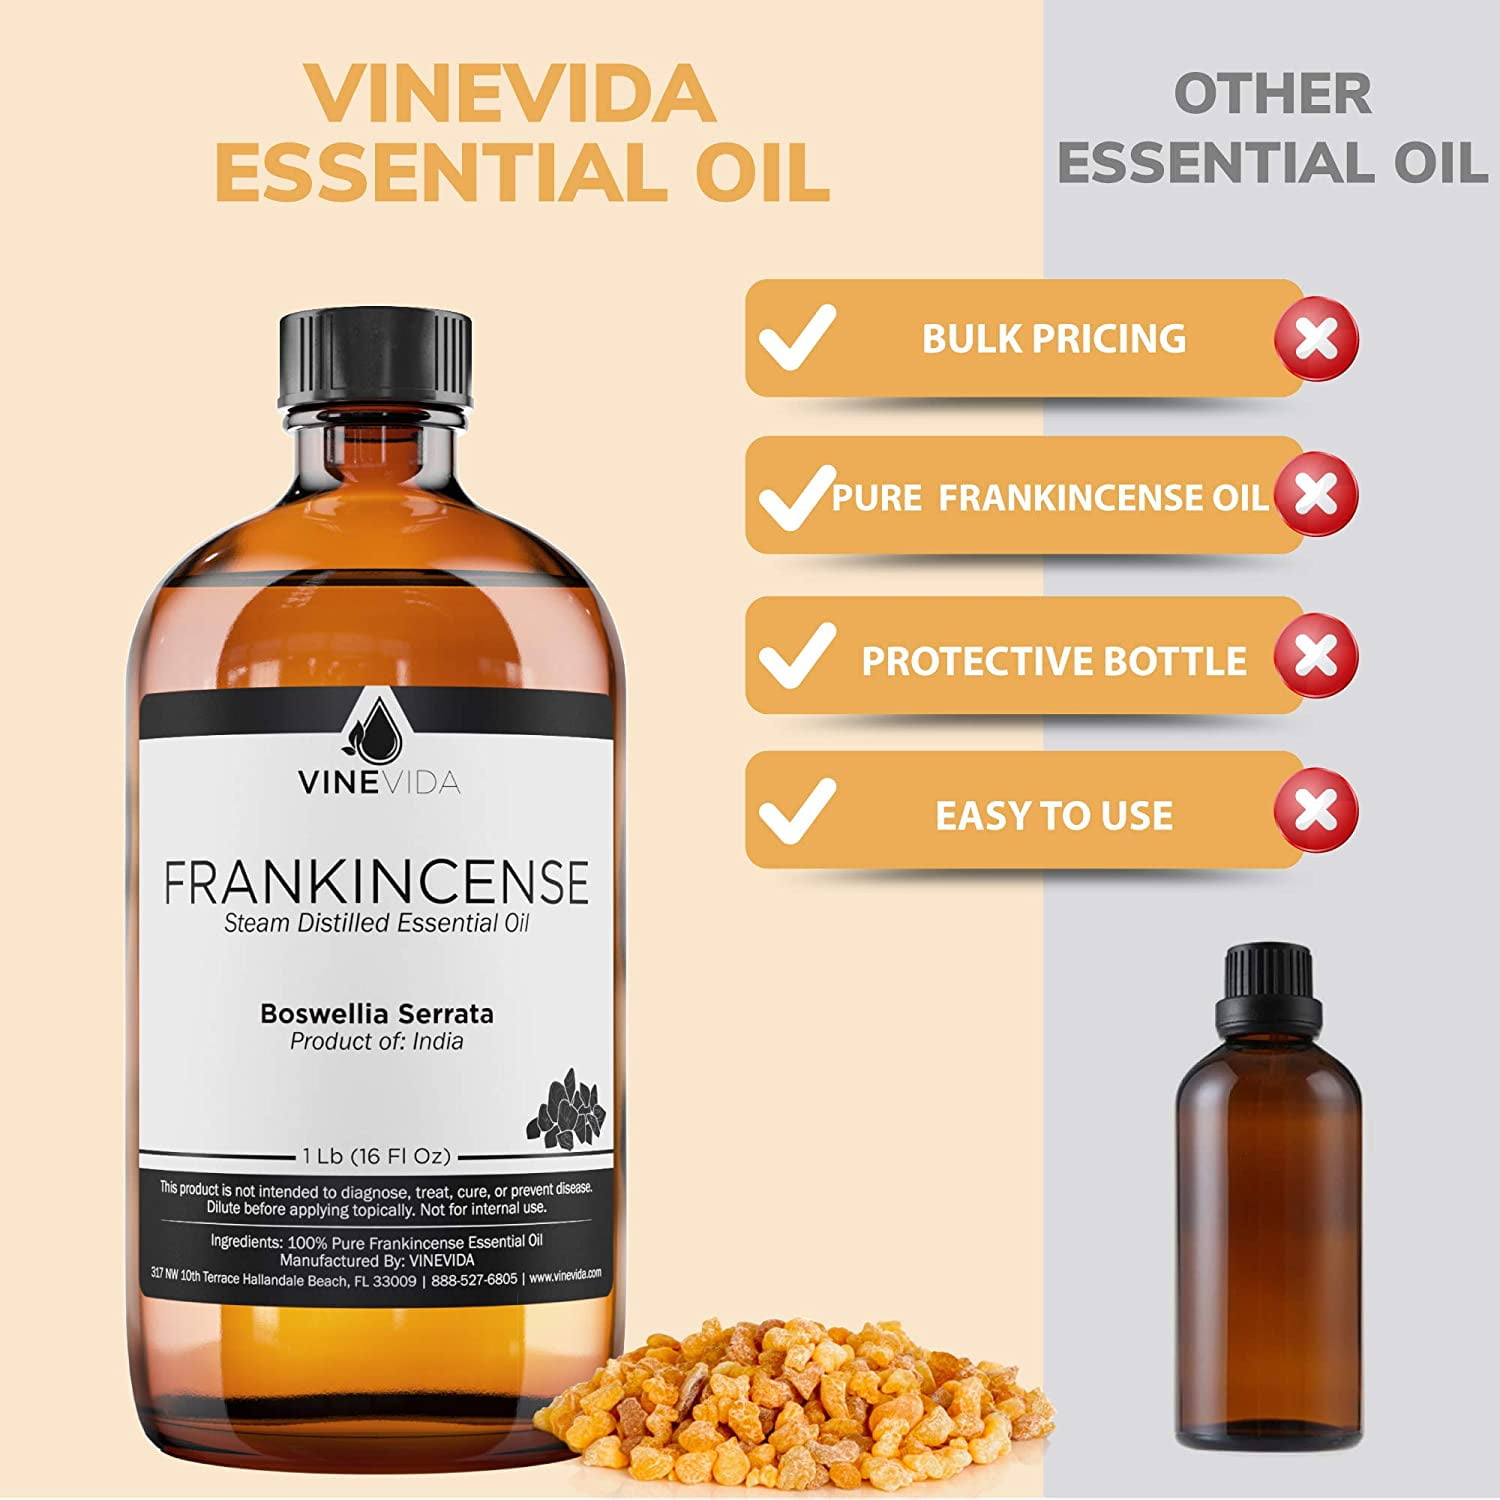 DIY: Ultimate Skin Scrub with Frankincense Essential Oil - Venture1105